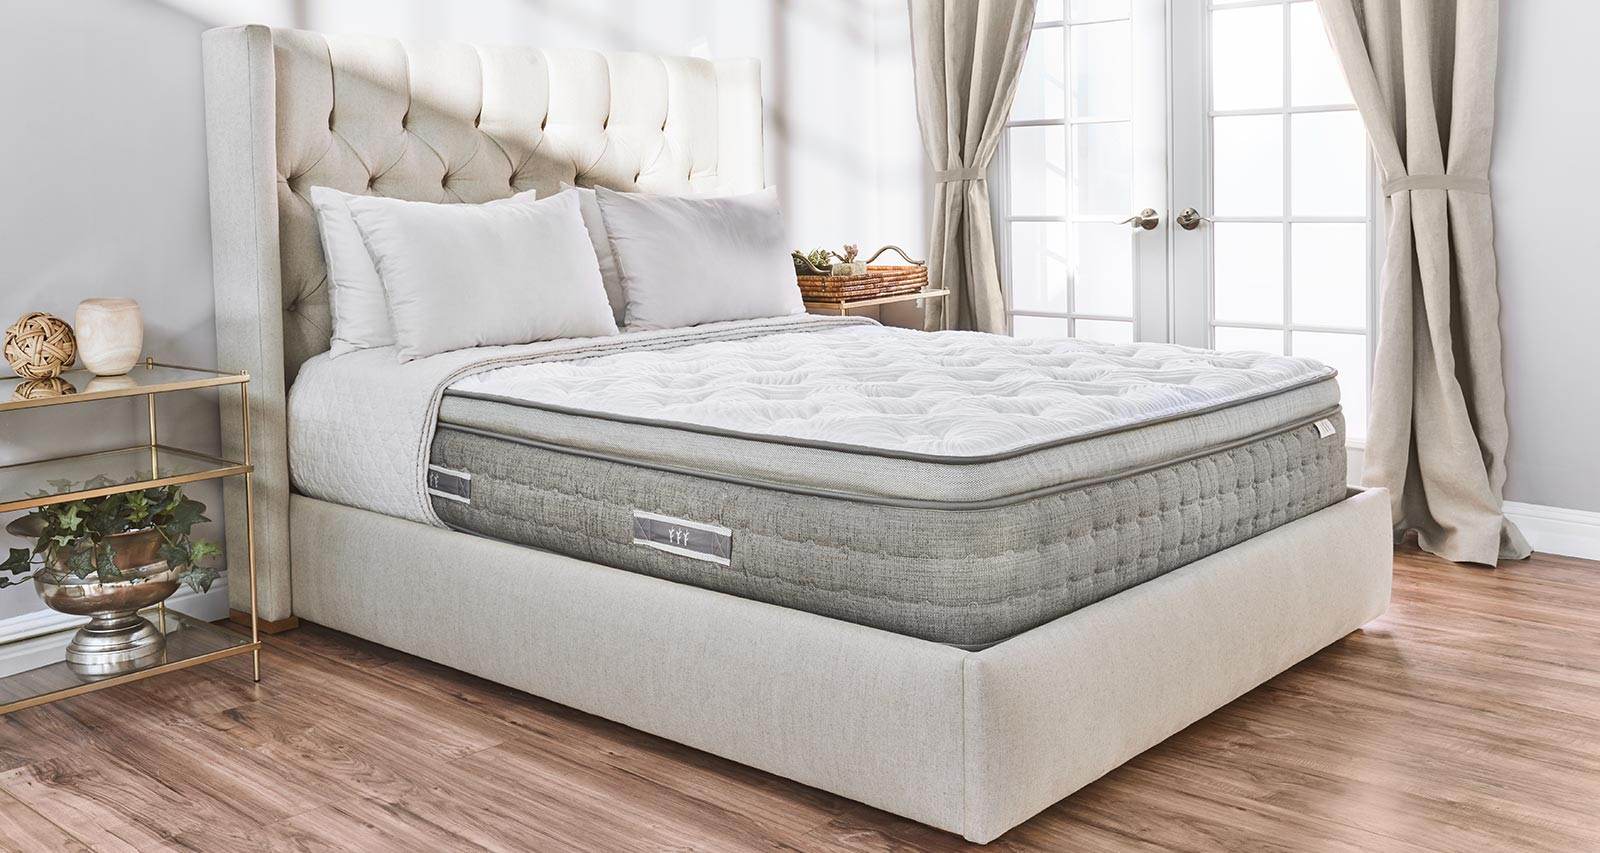 at home memory foam mattress